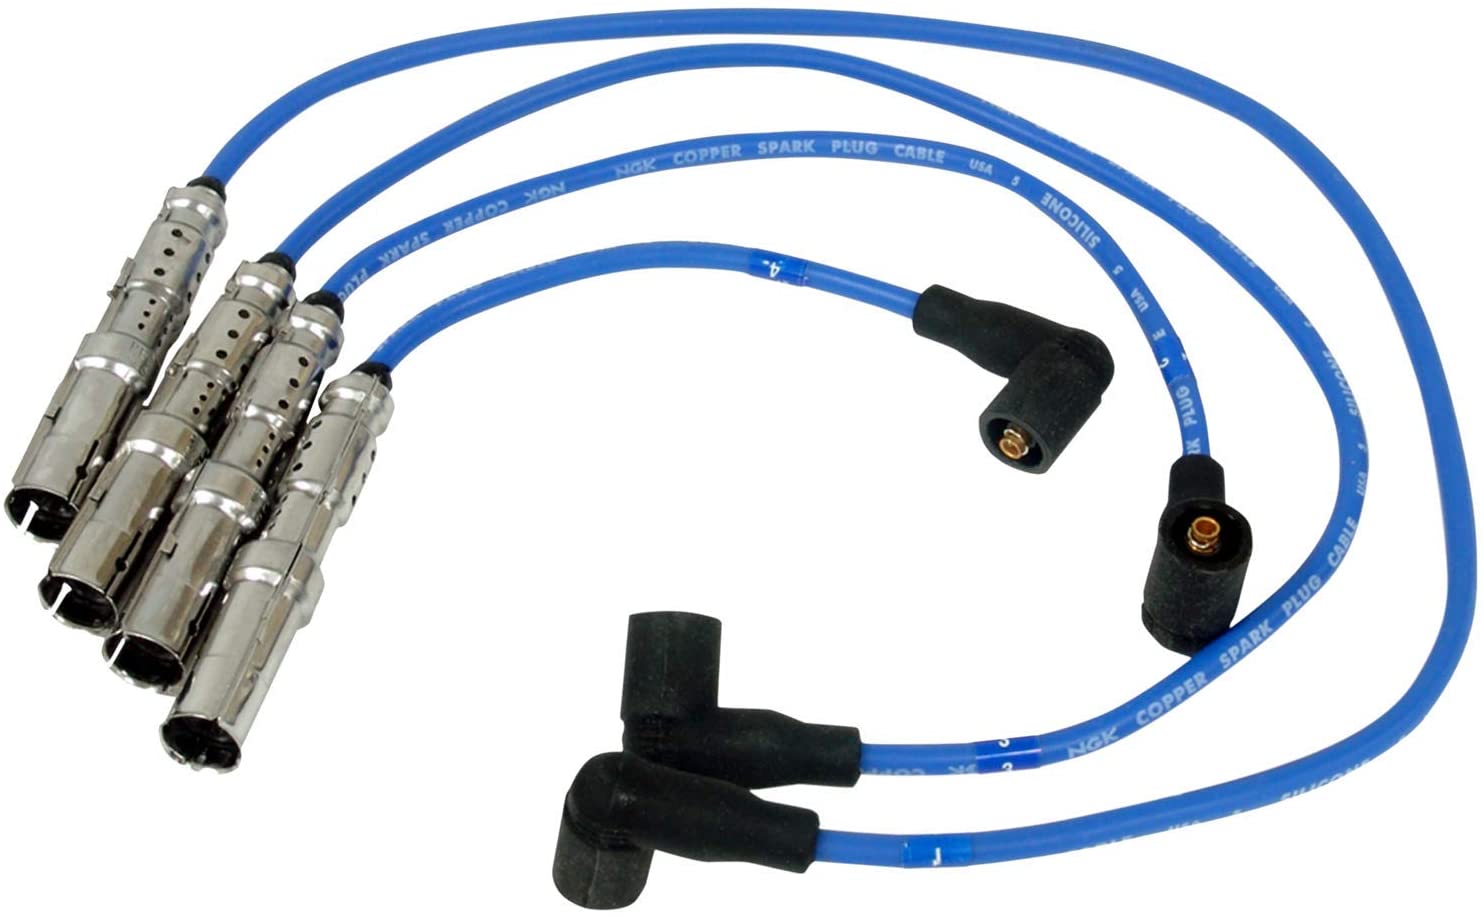 NGK (57021) RC-VWC039 Spark Plug Wire Set